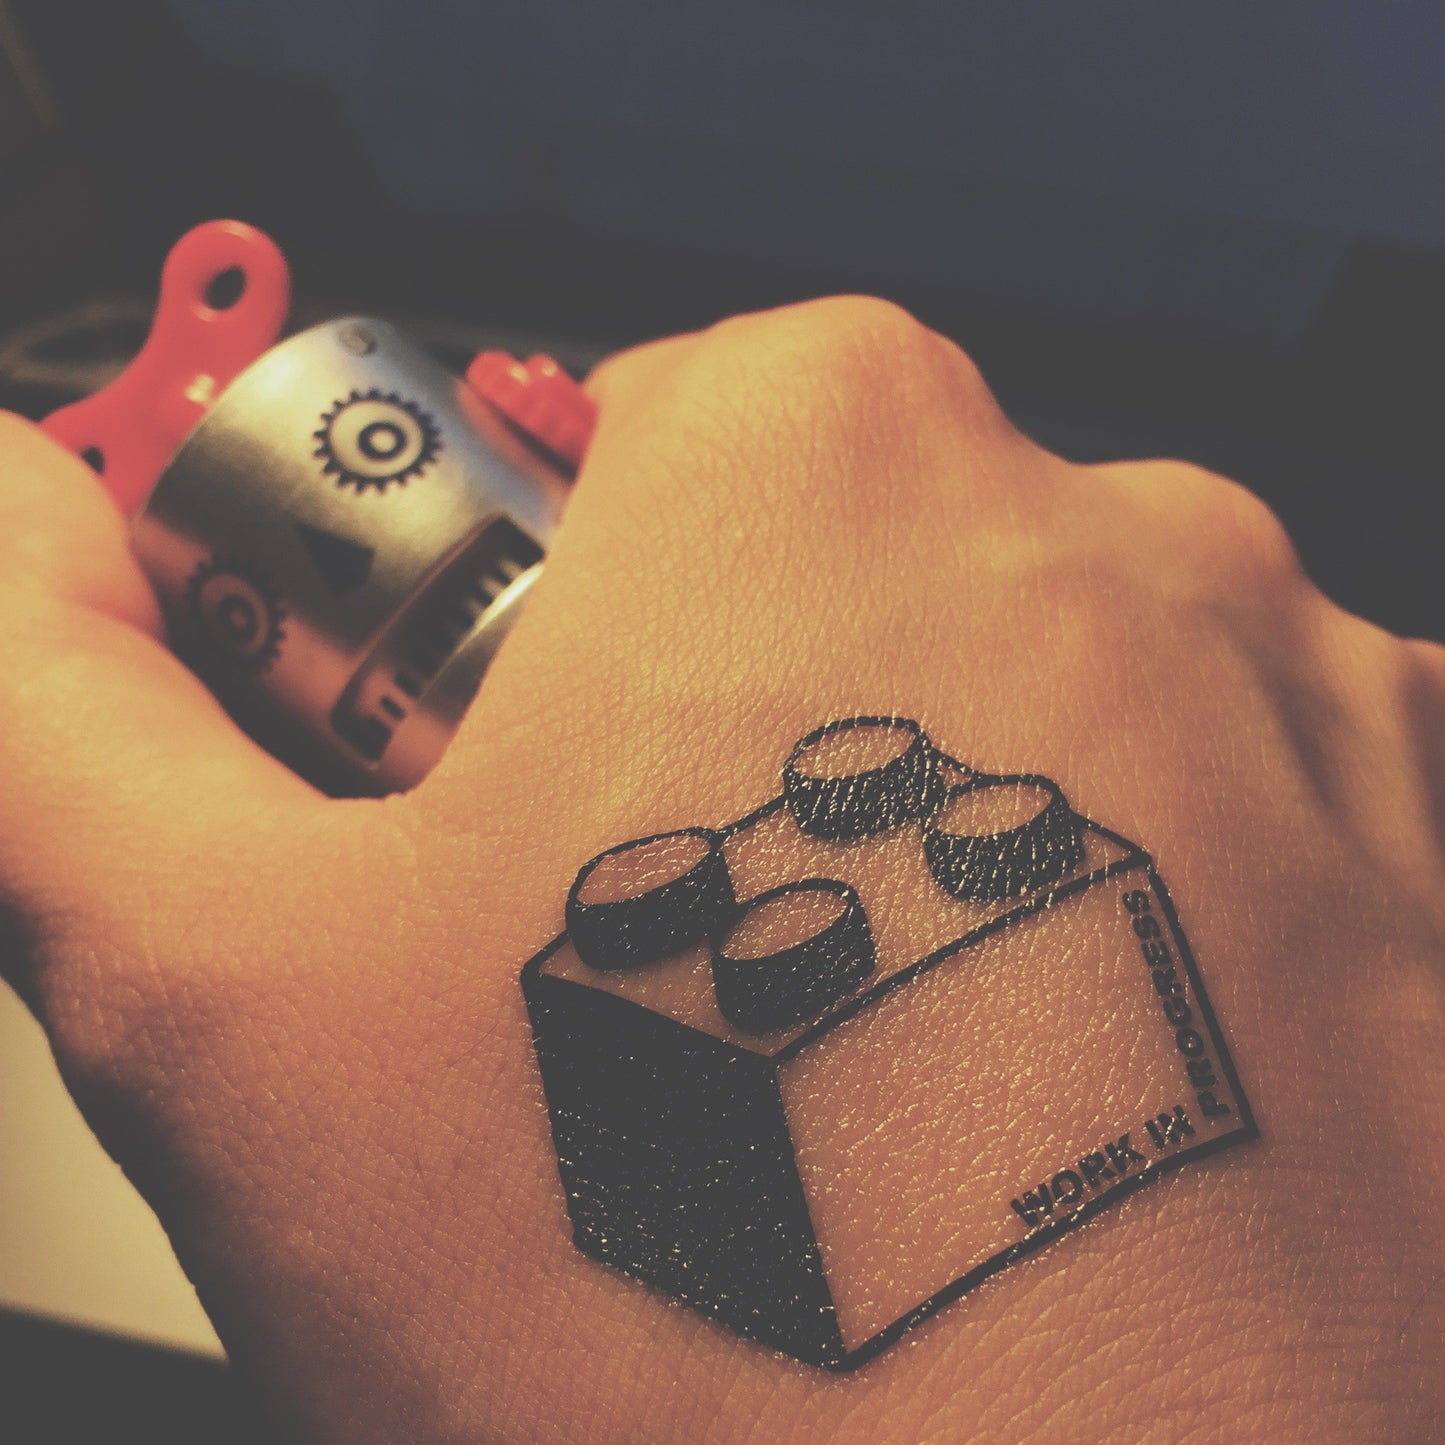 fake small lego block illustrative temporary tattoo sticker design idea on wrist